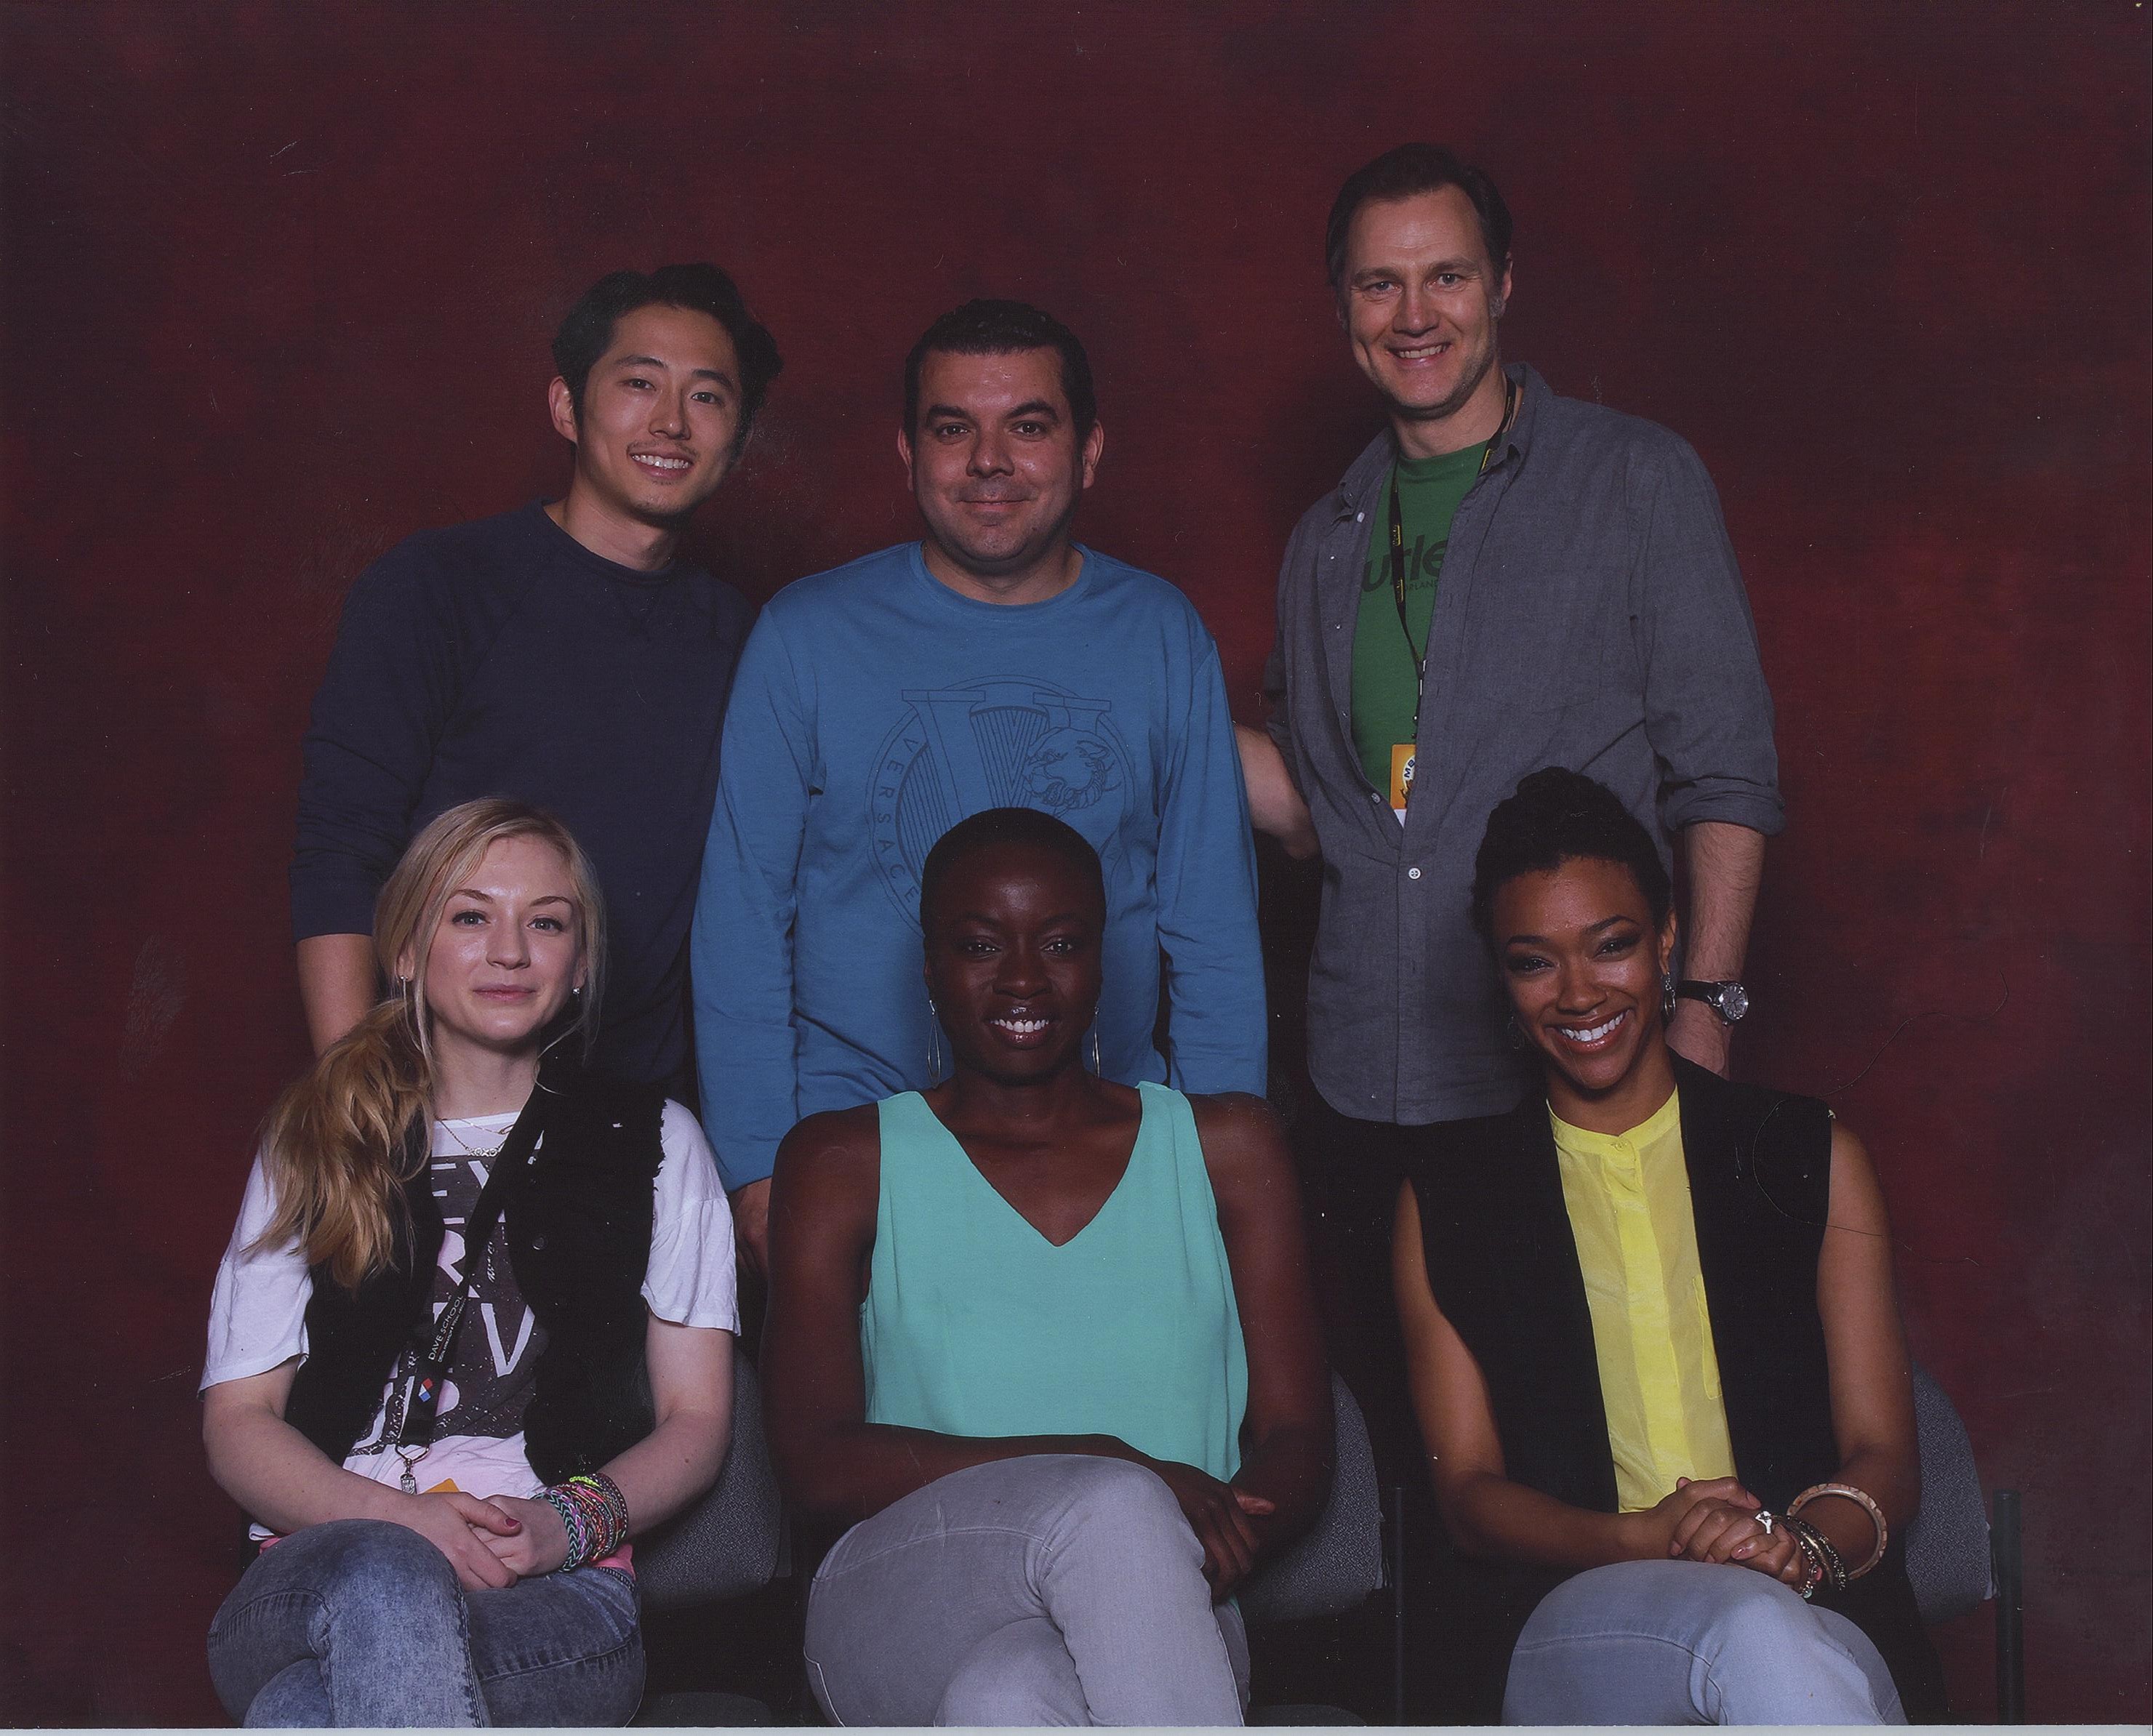 Mike Guzman And The Cast Of AMC's The Walking Dead: Steven Yeun, David Morrissey,Emily Kinney,Danai Gurira,Sonequa Martin-Green